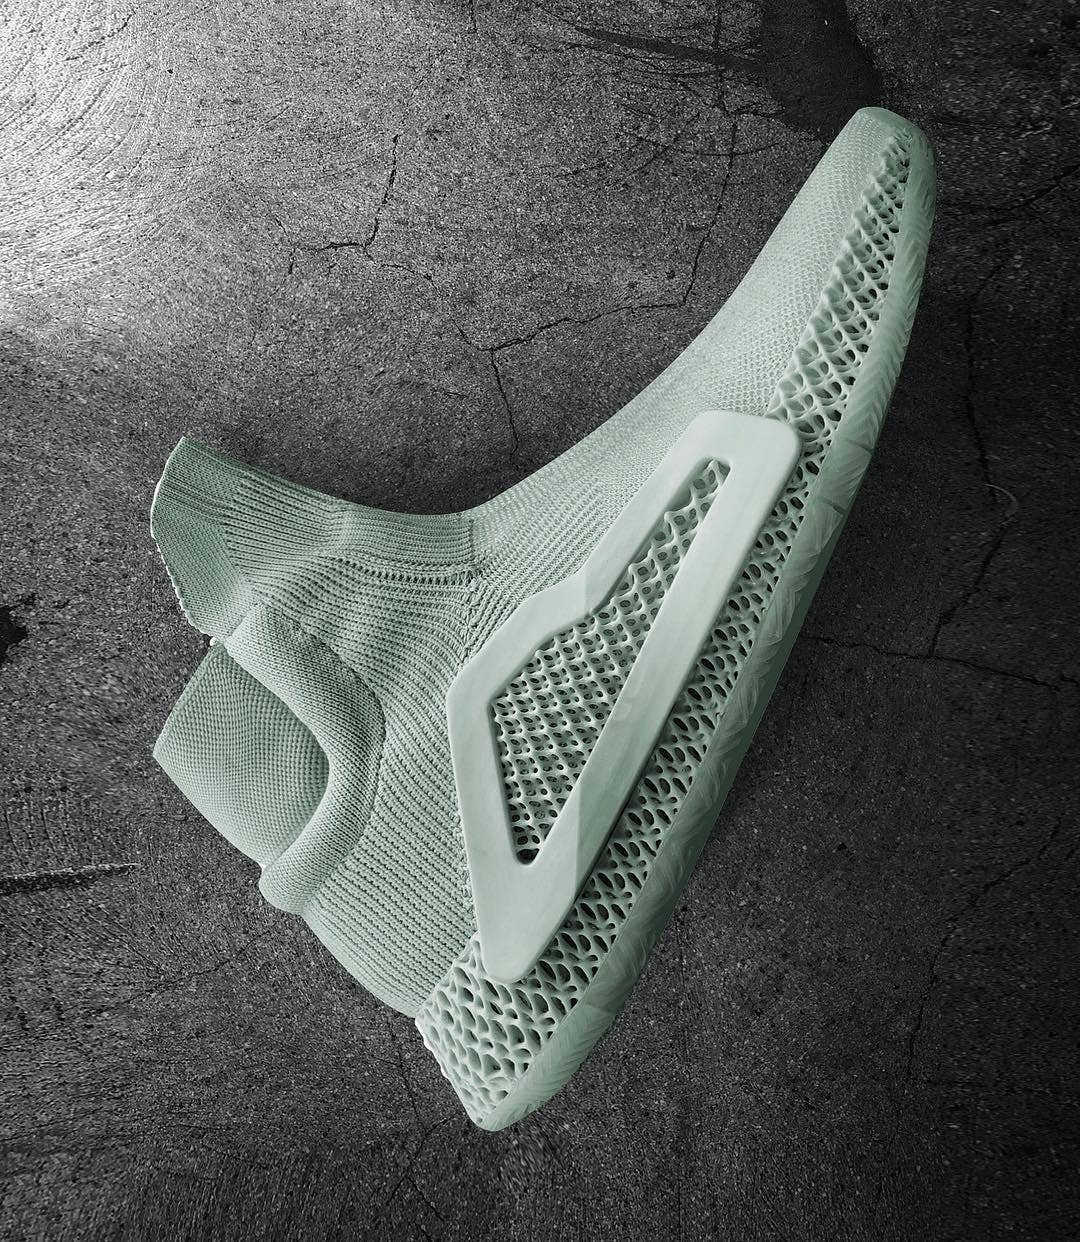 Adidas Futurecraft 4D Basketball Shoe